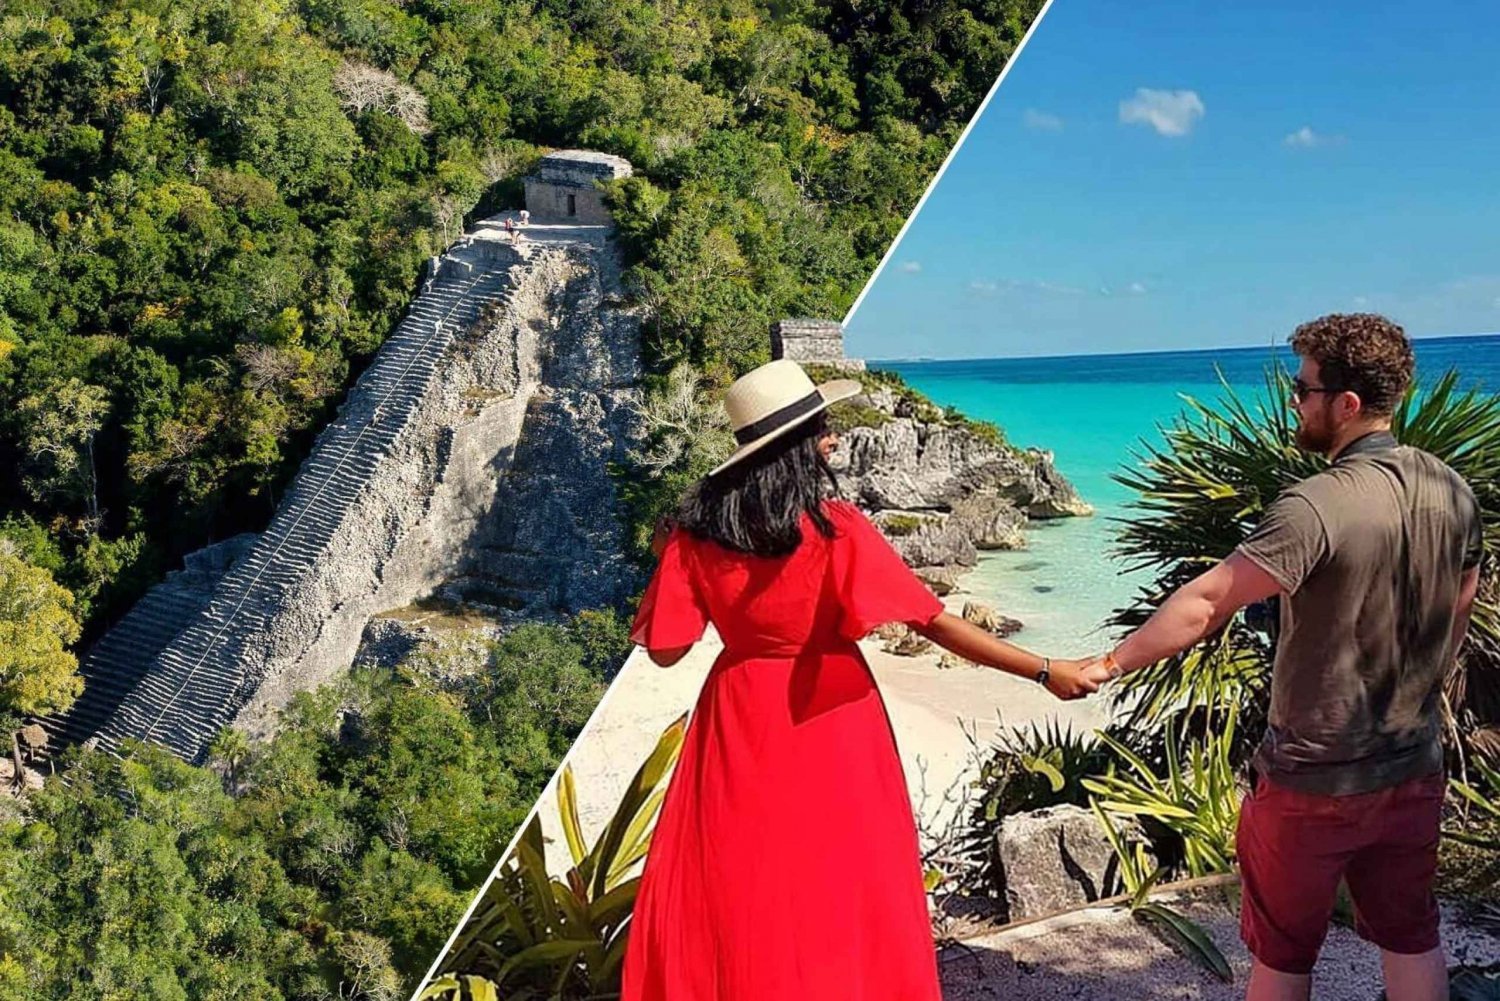 From Cancun and Riviera Maya: Tulum, Coba, Cenote and Playa